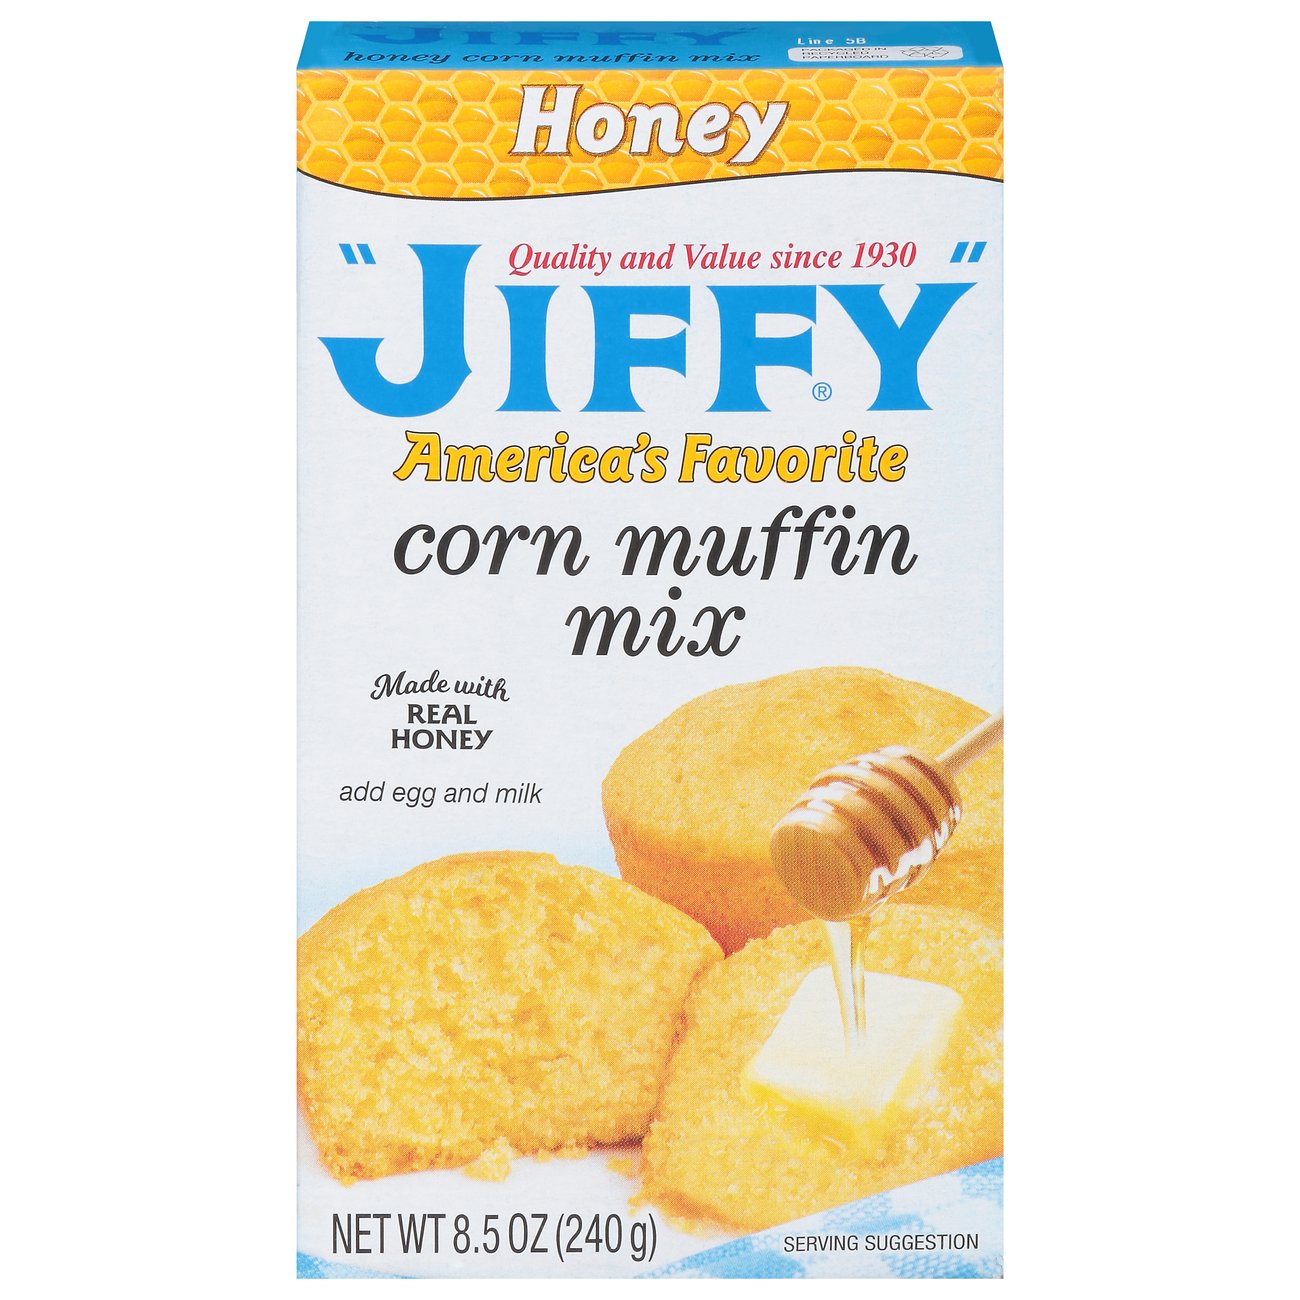 jiffy cornbread directions on box